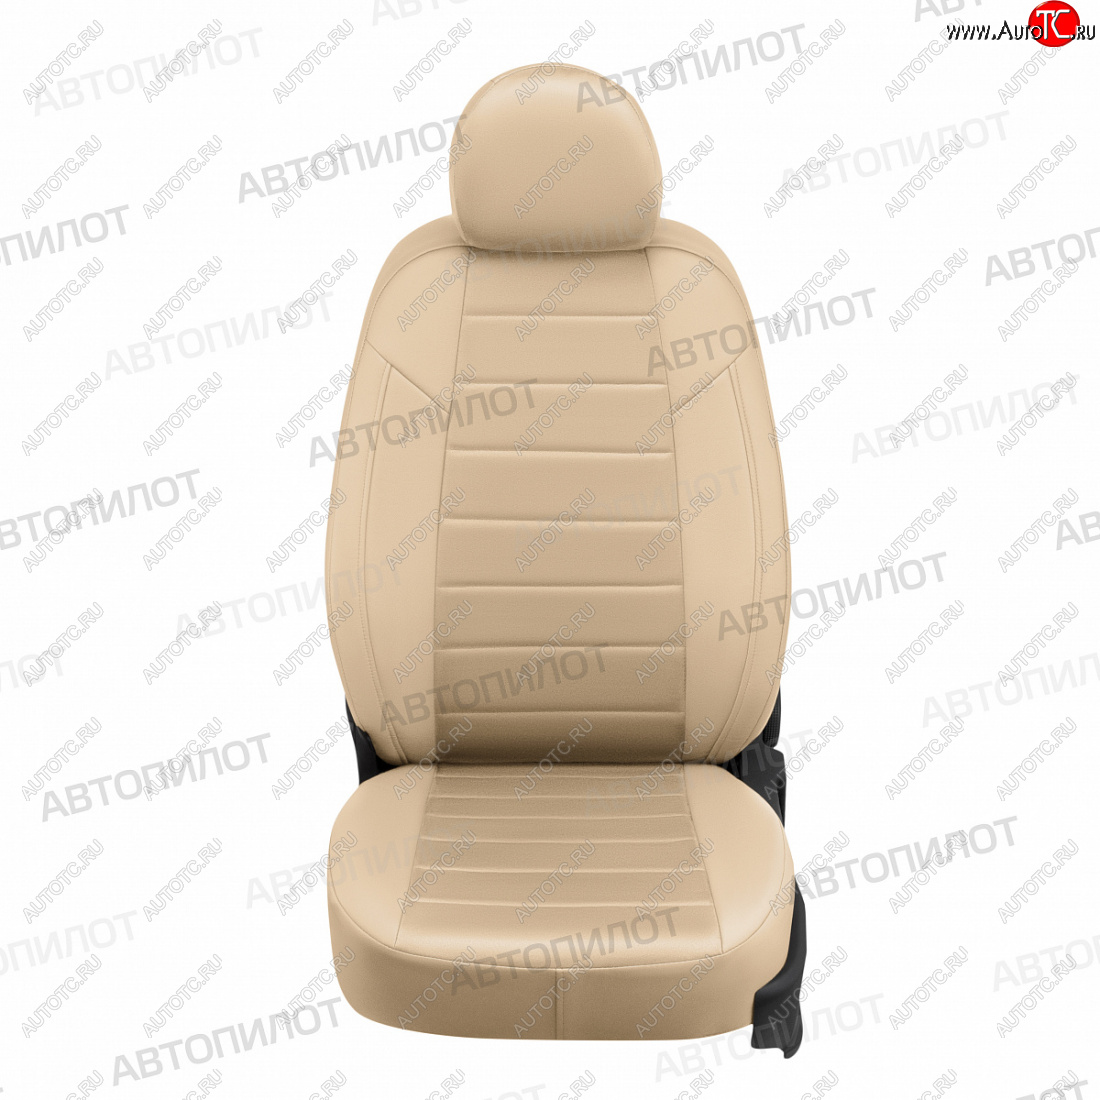 21 599 р. Чехлы сидений (экокожа/алькантара, 9 мест) Автопилот Hyundai Starex/H1 A1 дорестайлинг (1997-2004) (бежевый)